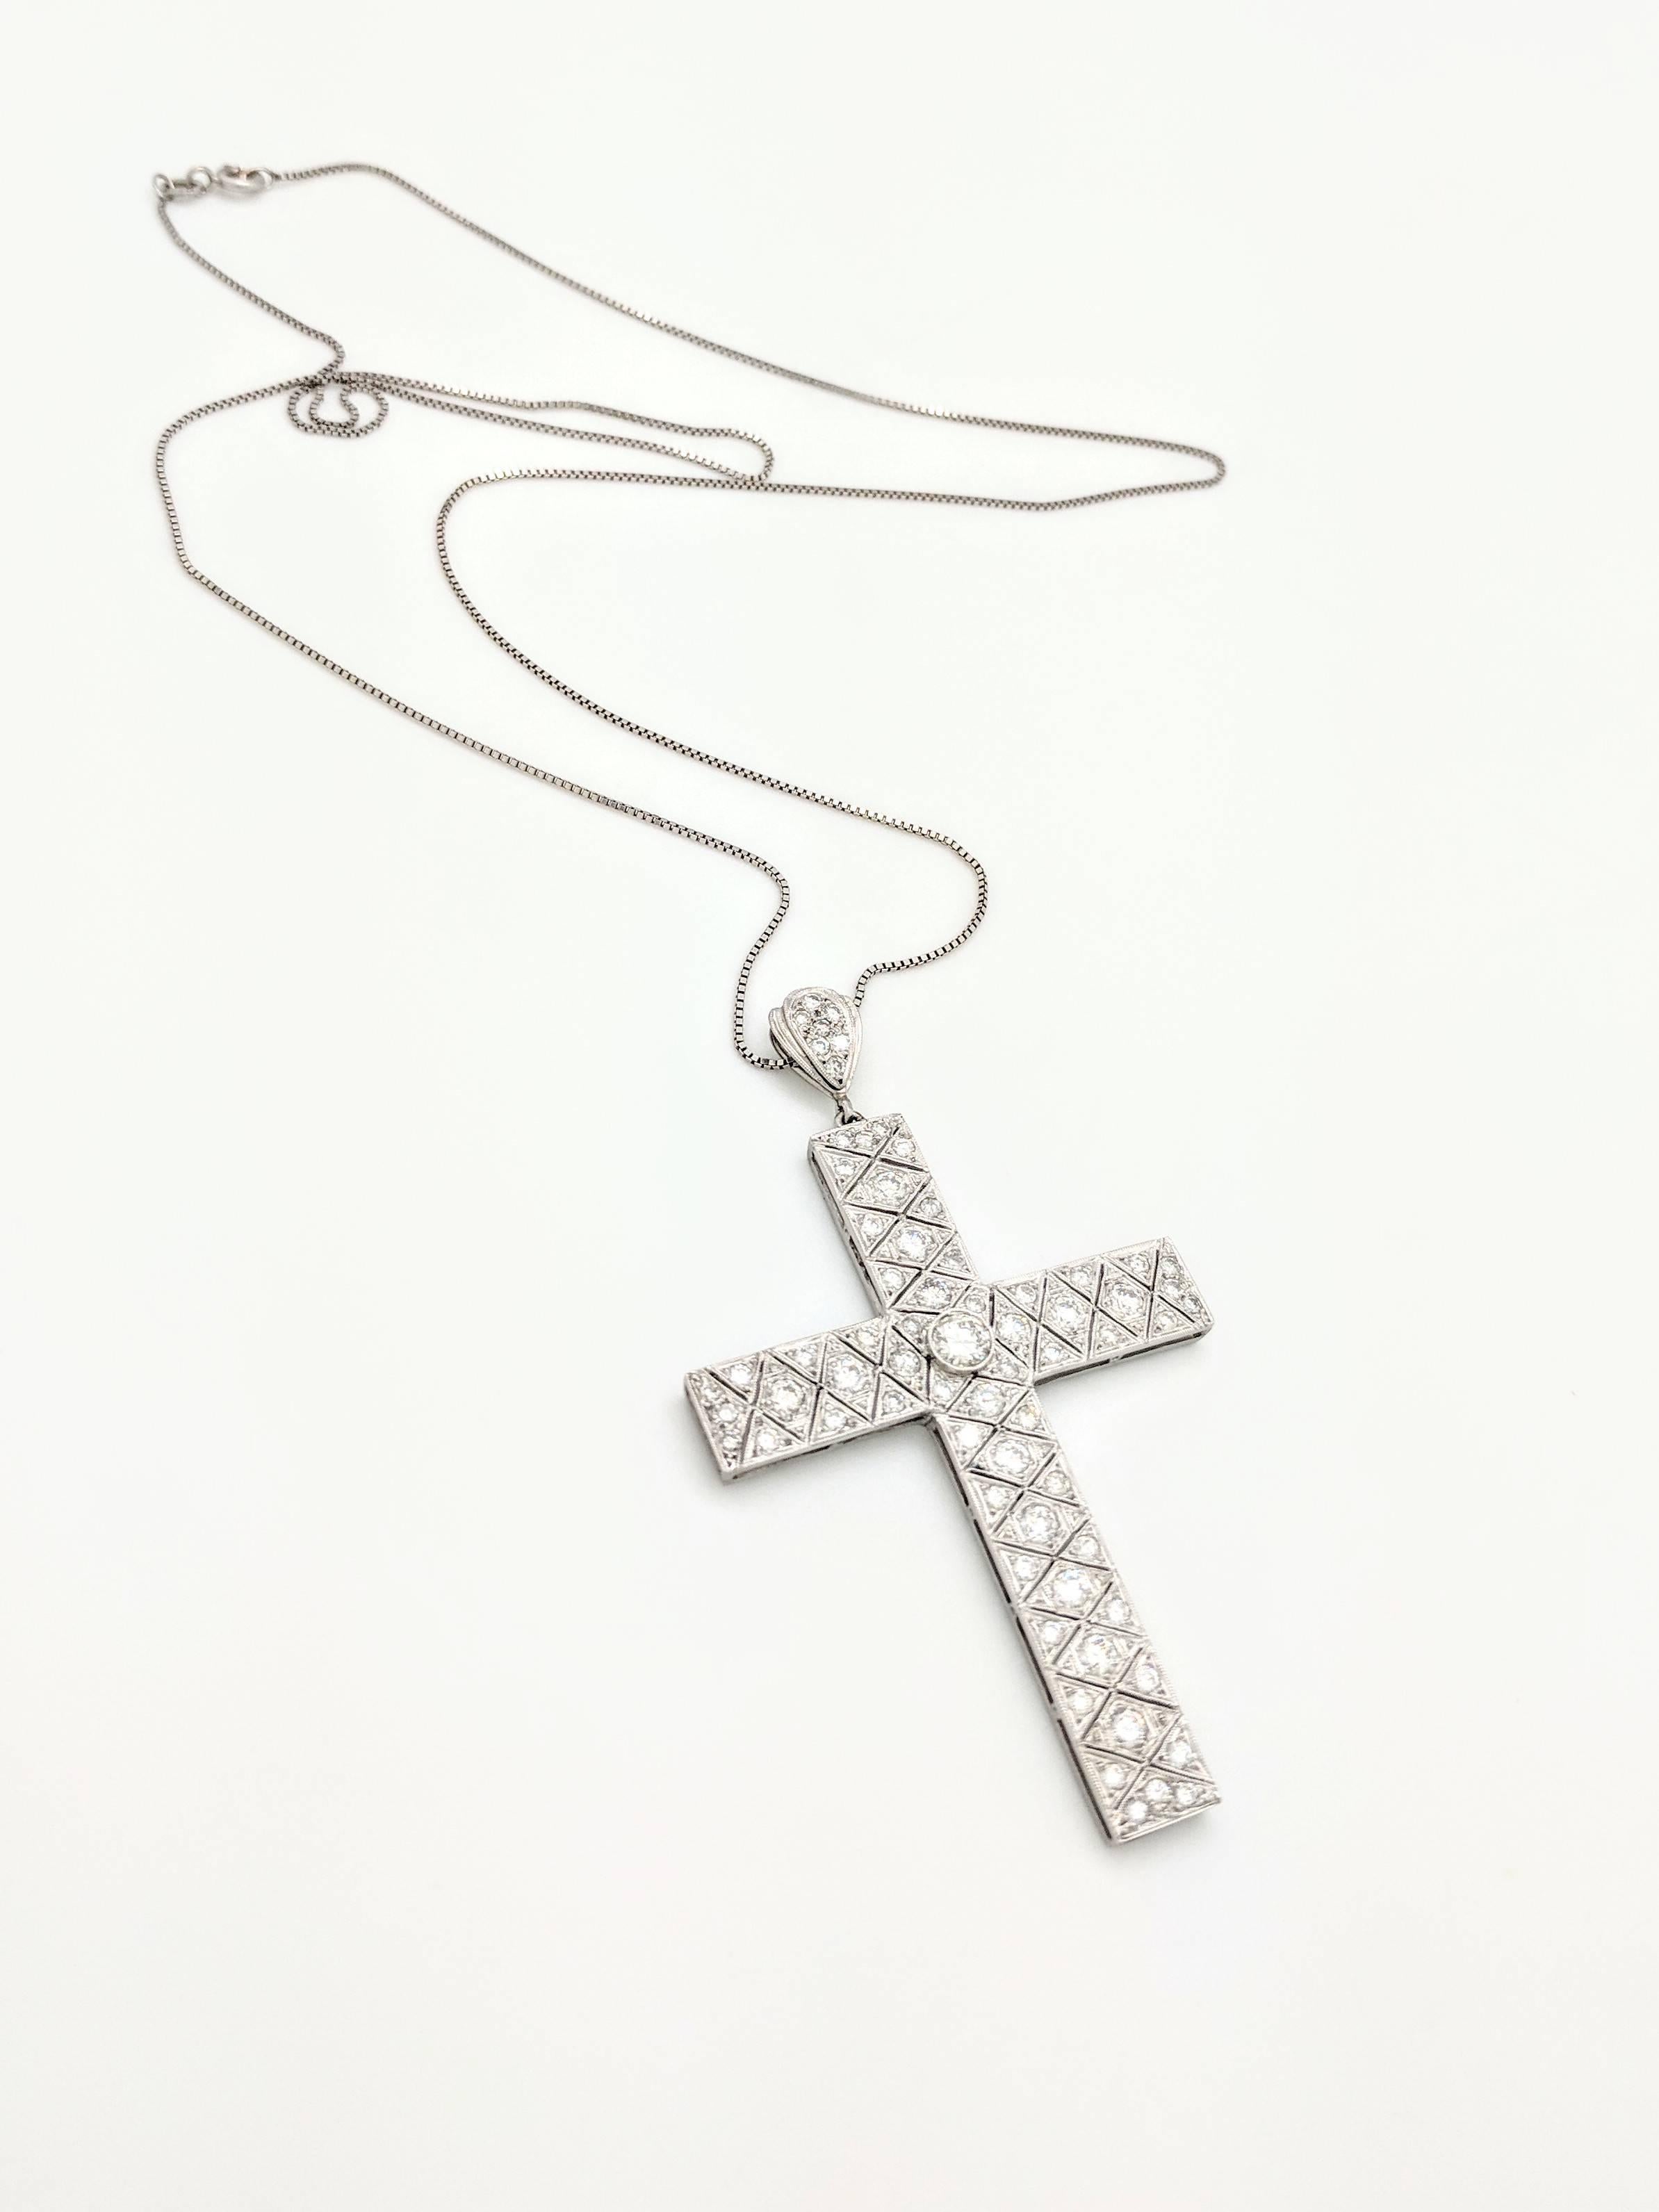 Art Deco Filigree Platinum Diamond Cross Pendant Necklace 3.03ctw For Sale 5